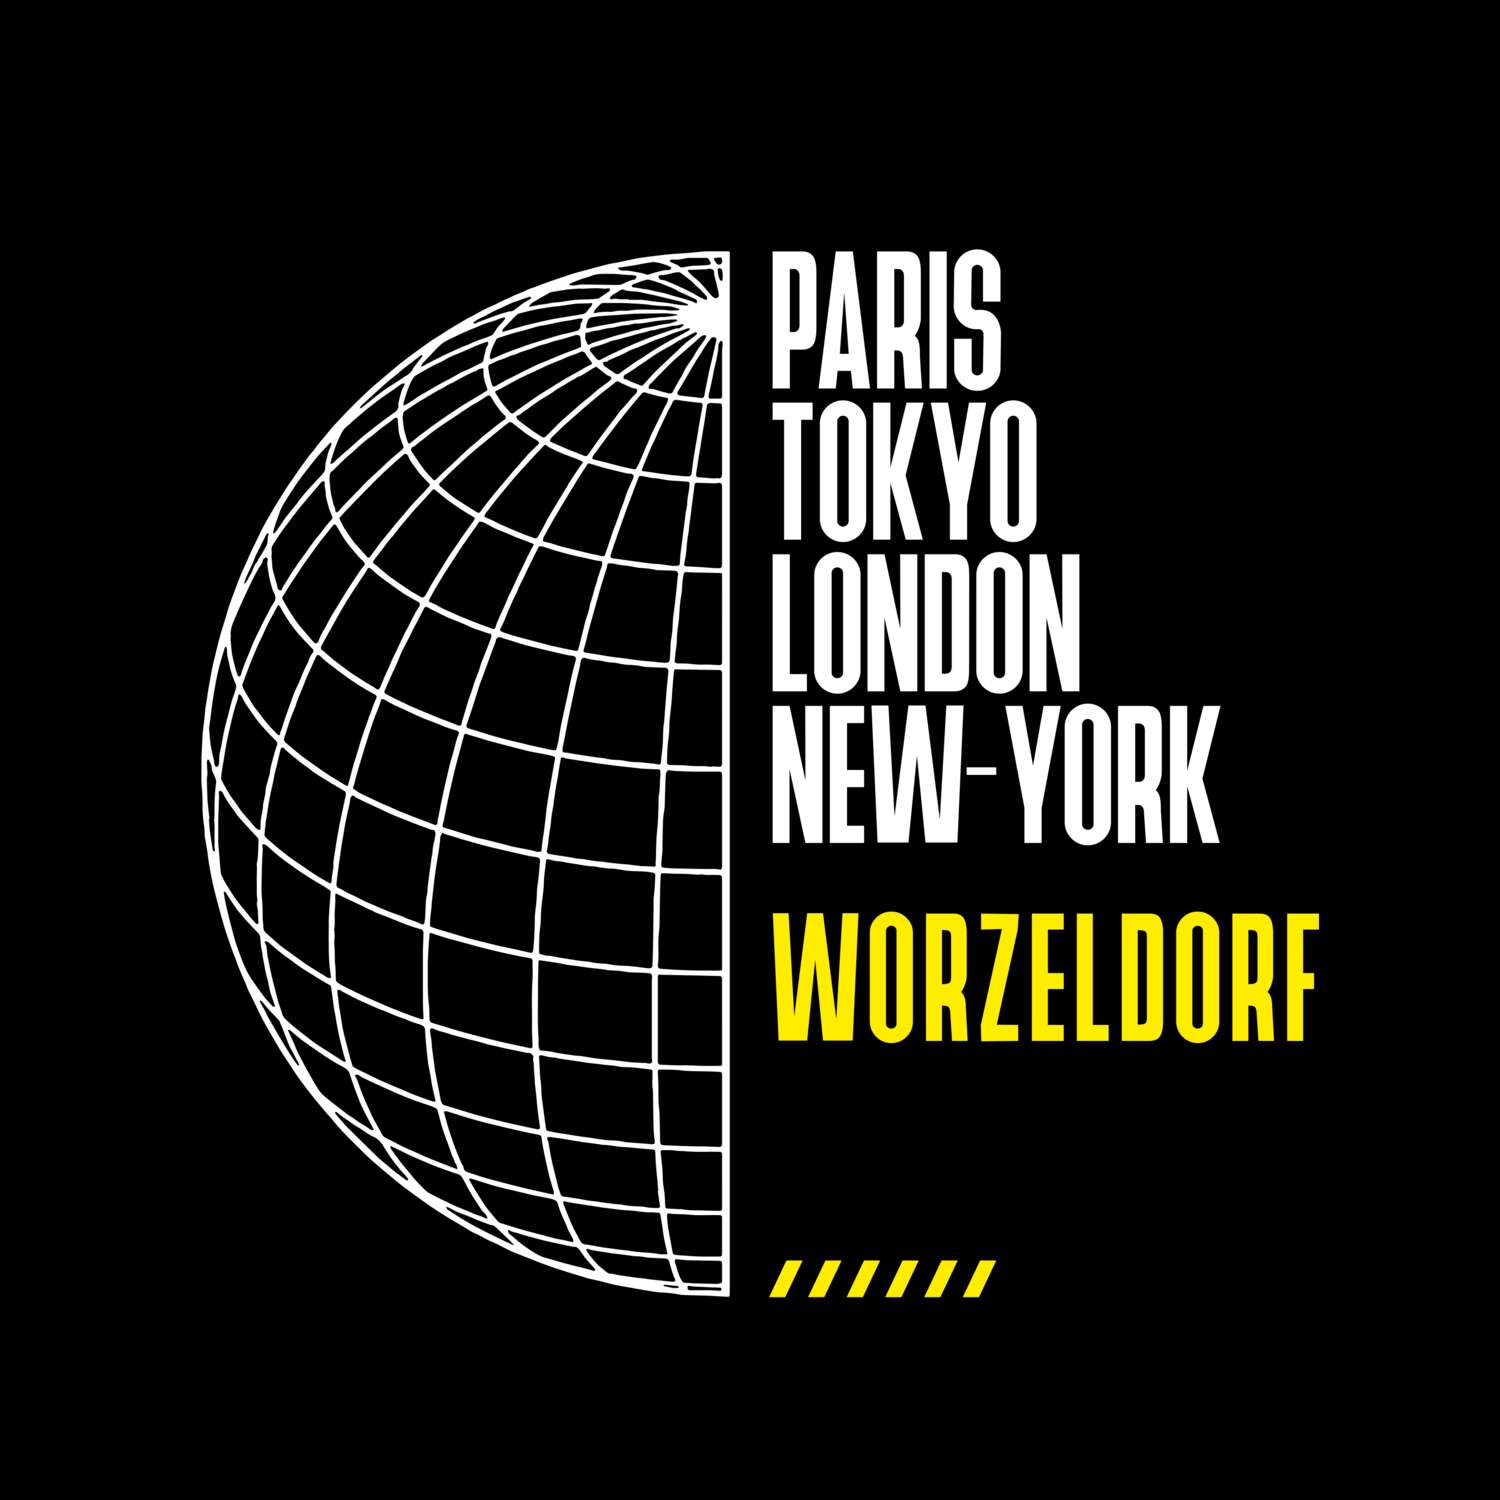 Worzeldorf T-Shirt »Paris Tokyo London«